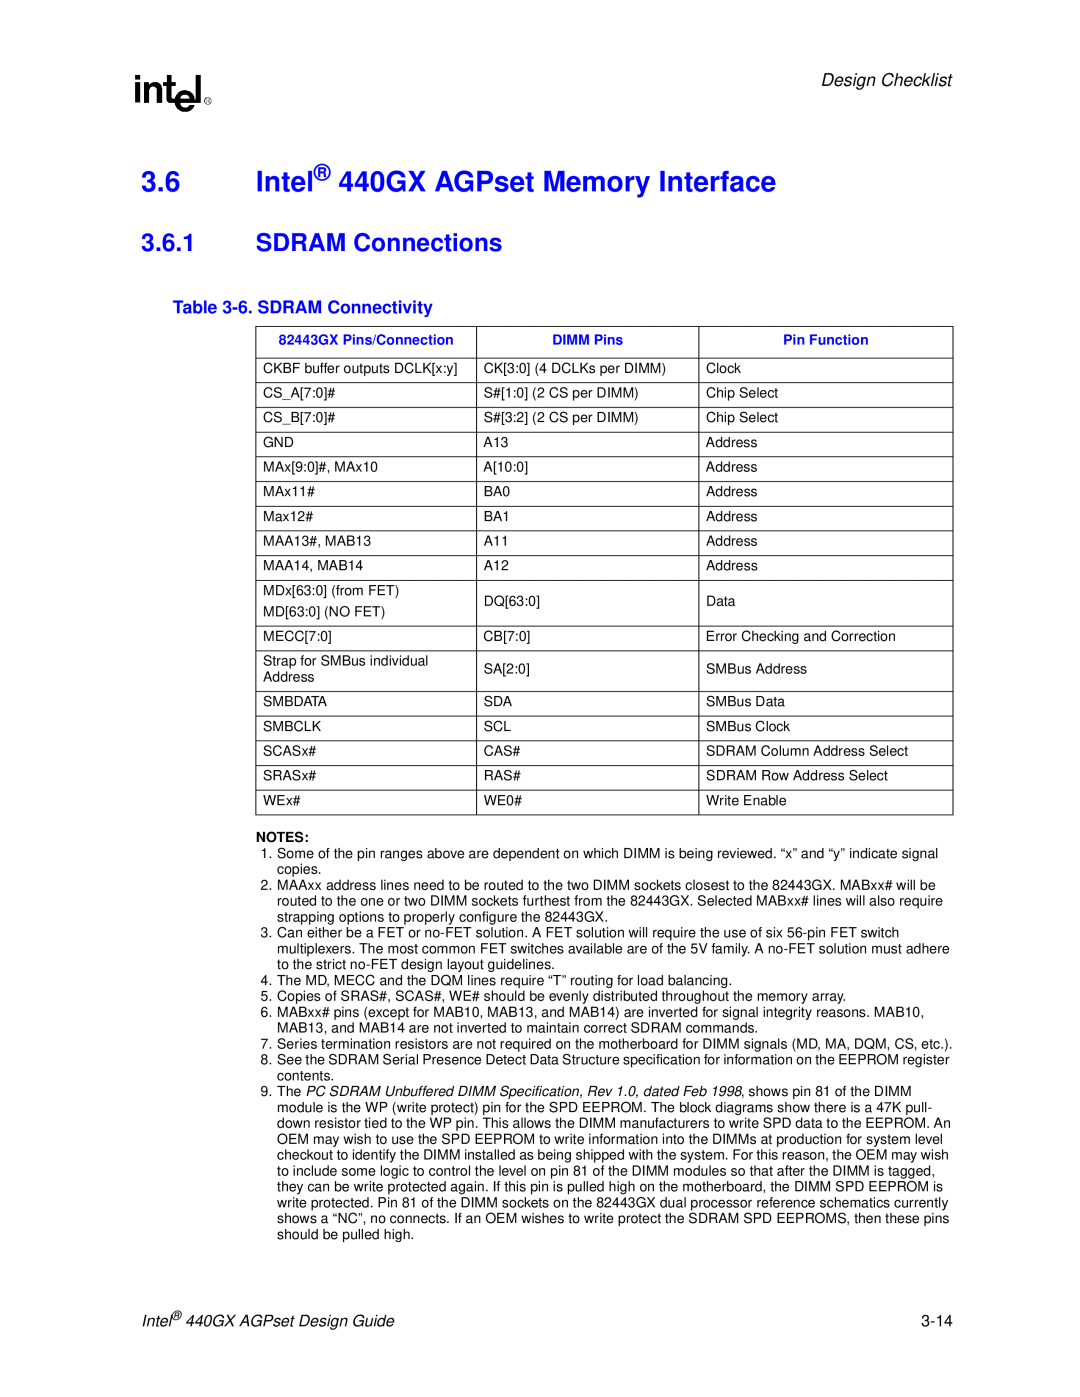 Intel manual Intel 440GX AGPset Memory Interface, SDRAM Connections, 6. SDRAM Connectivity, Design Checklist, 3-14 